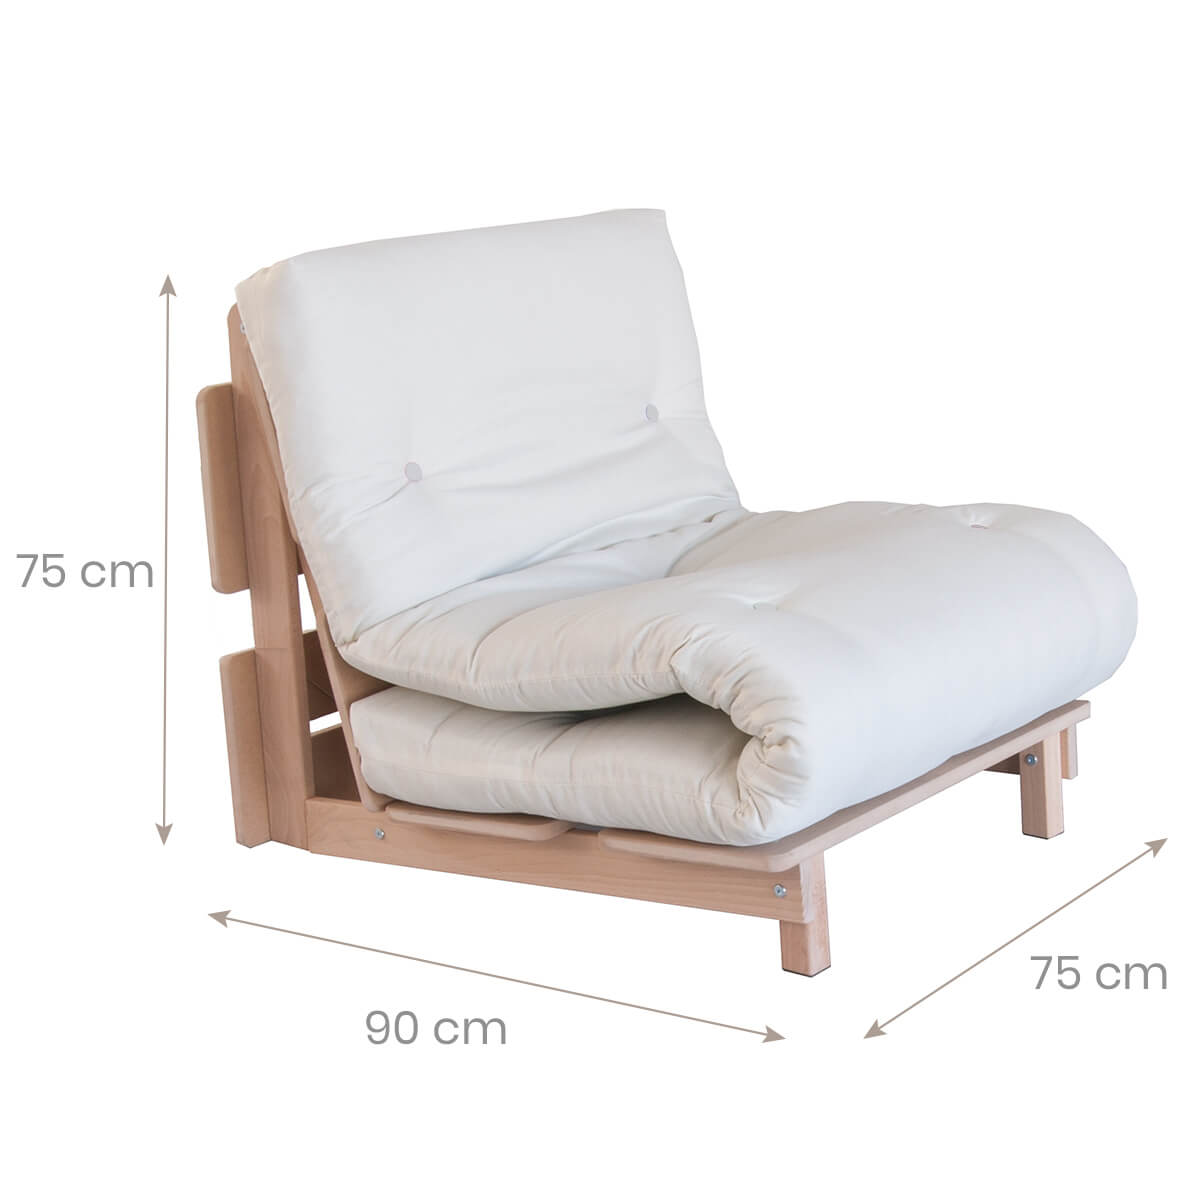 white futon chair bed dimensions